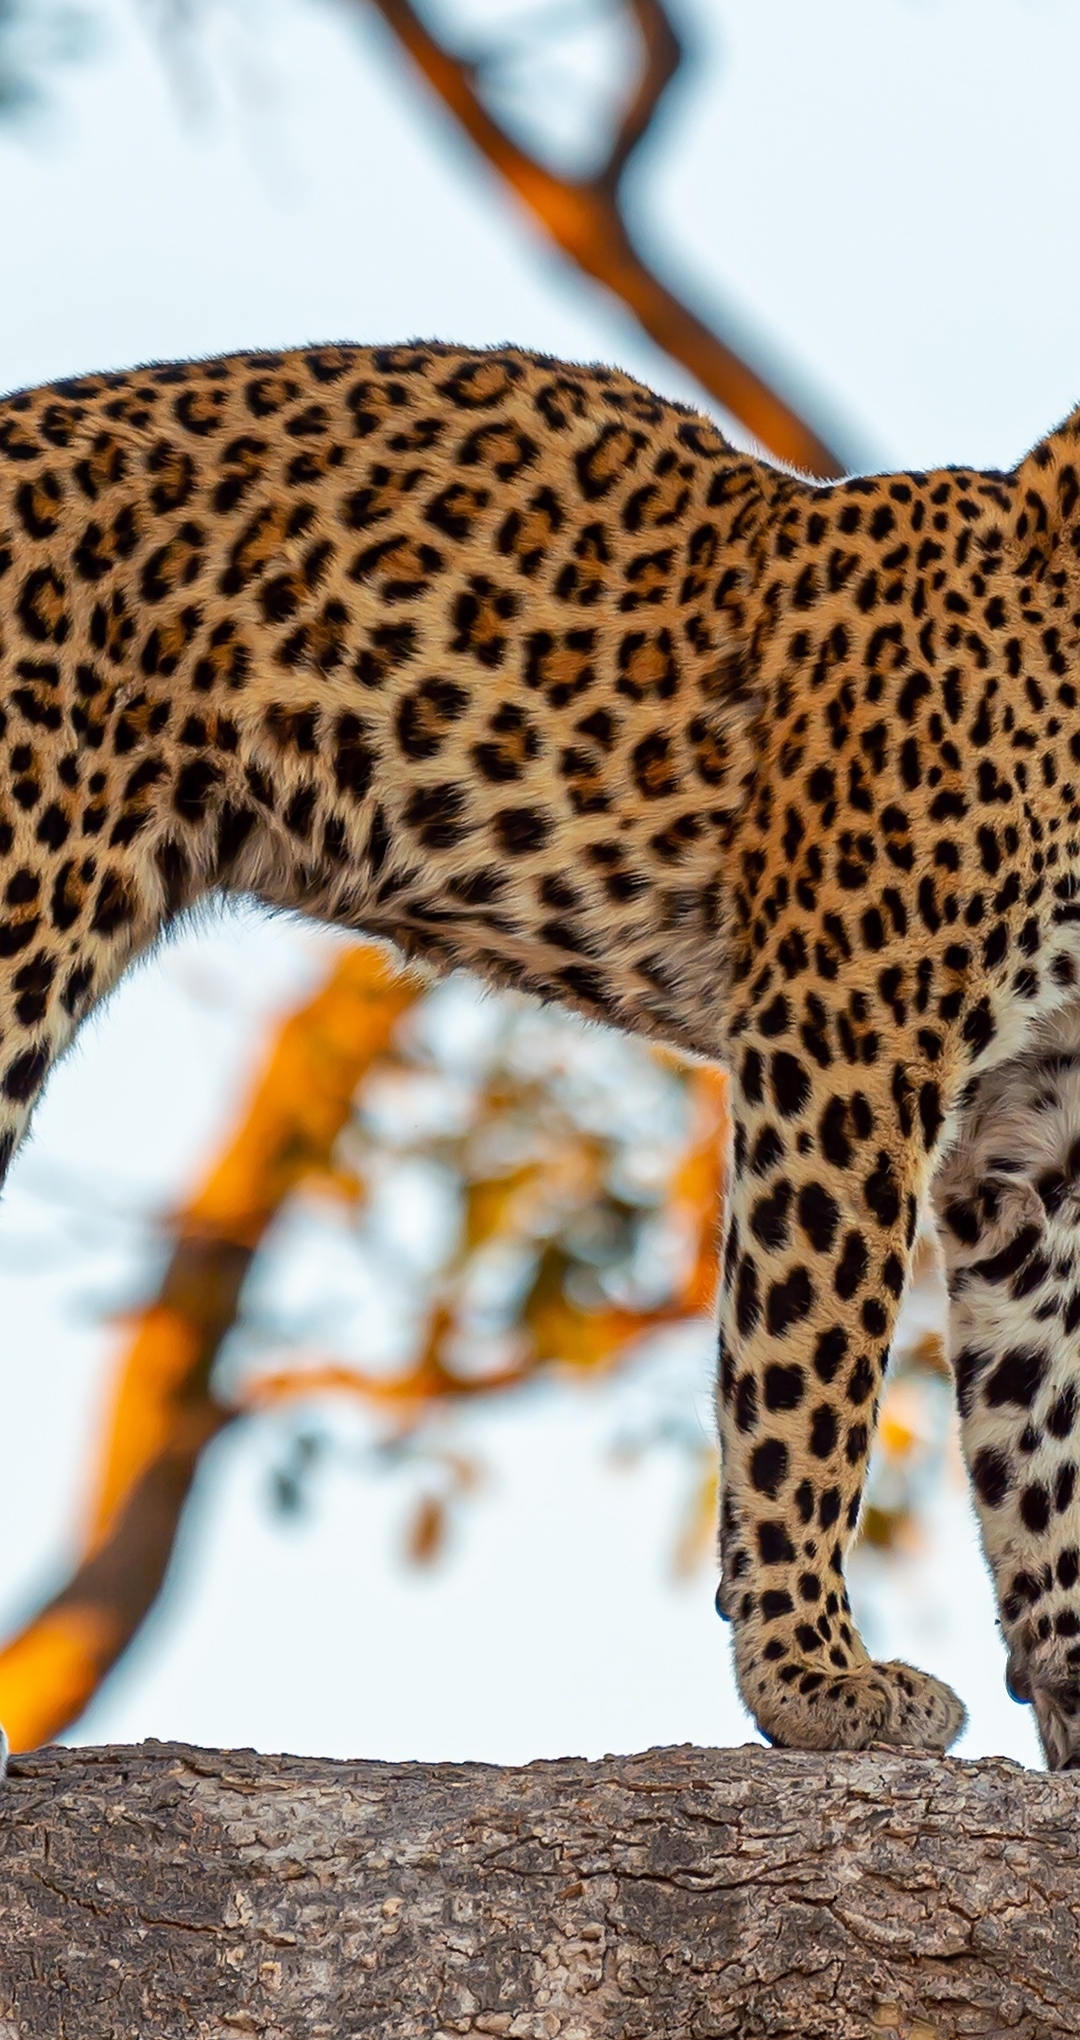 Image: Leopard, cat, predator, tree, trunk, stands, pose